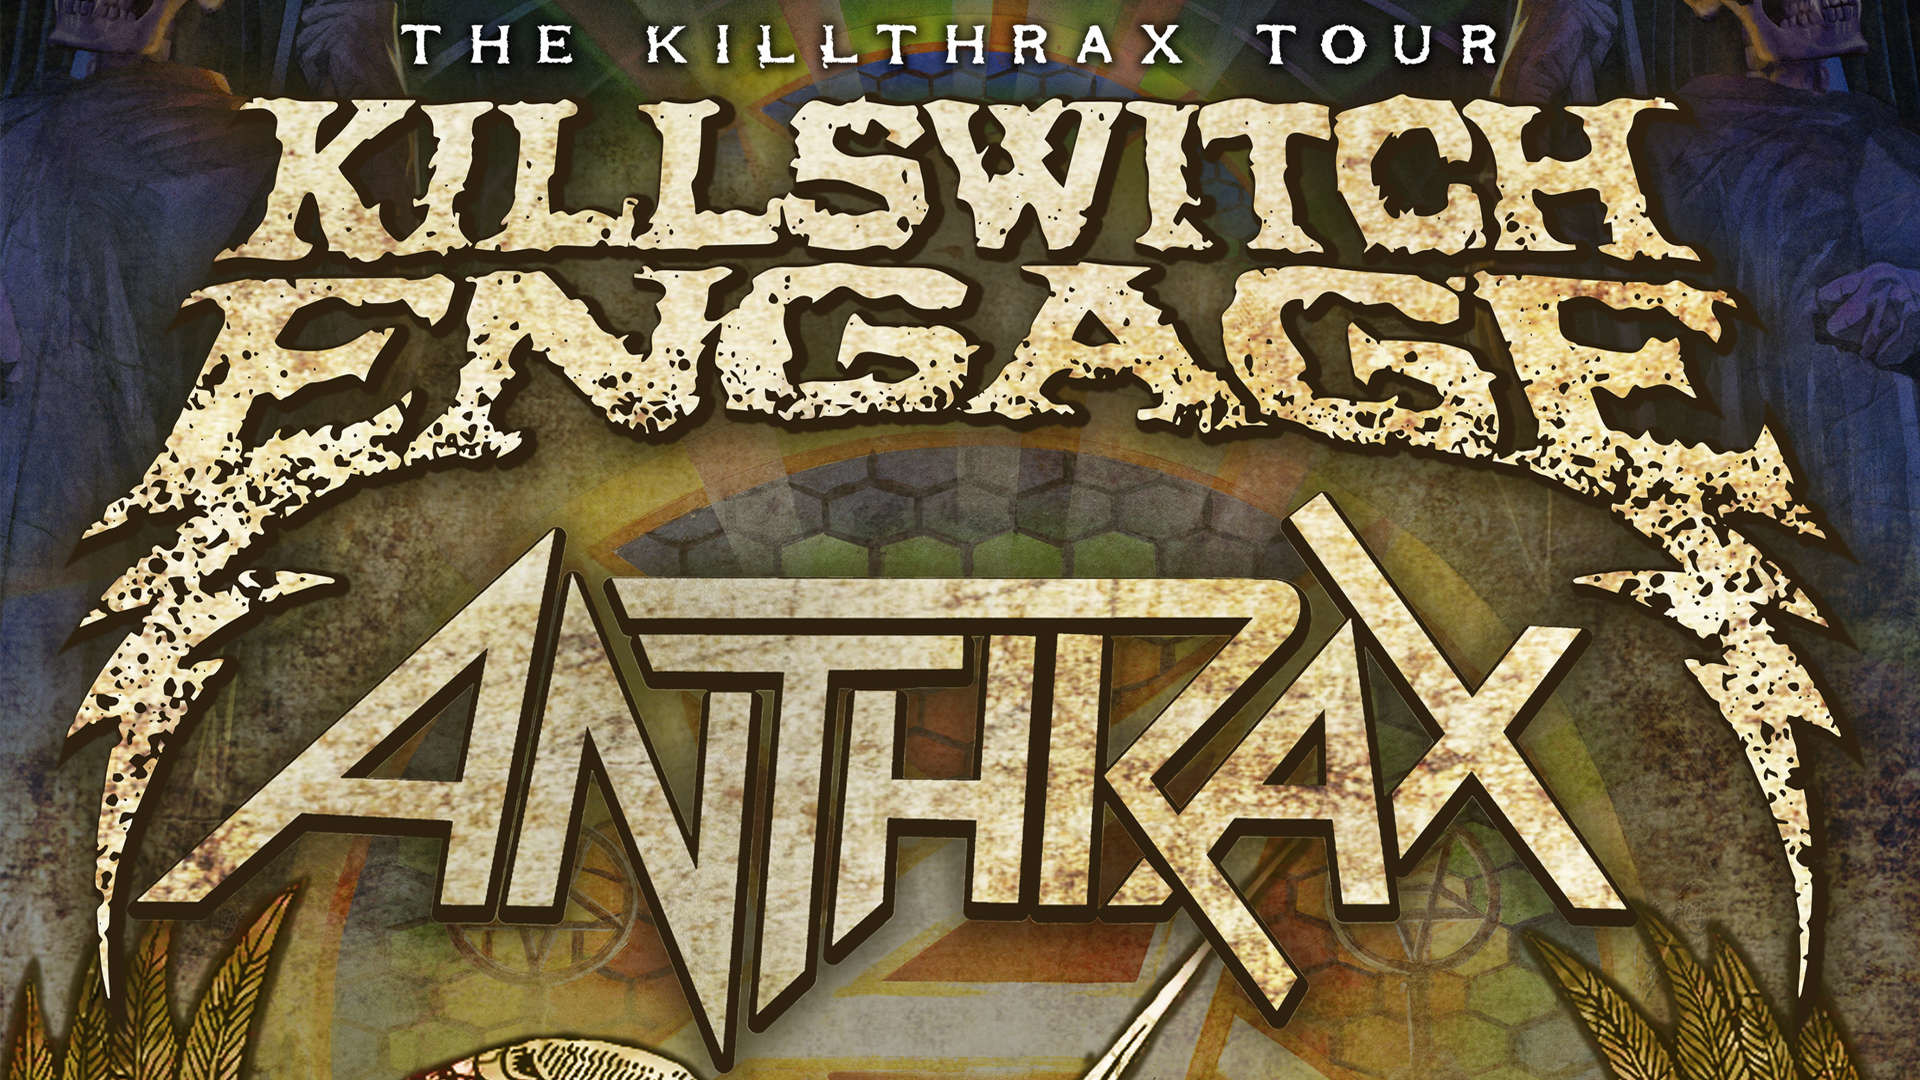 1920x1080 Sirius XM presents: Killswitch Engage & Anthrax – The Killthrax Tour